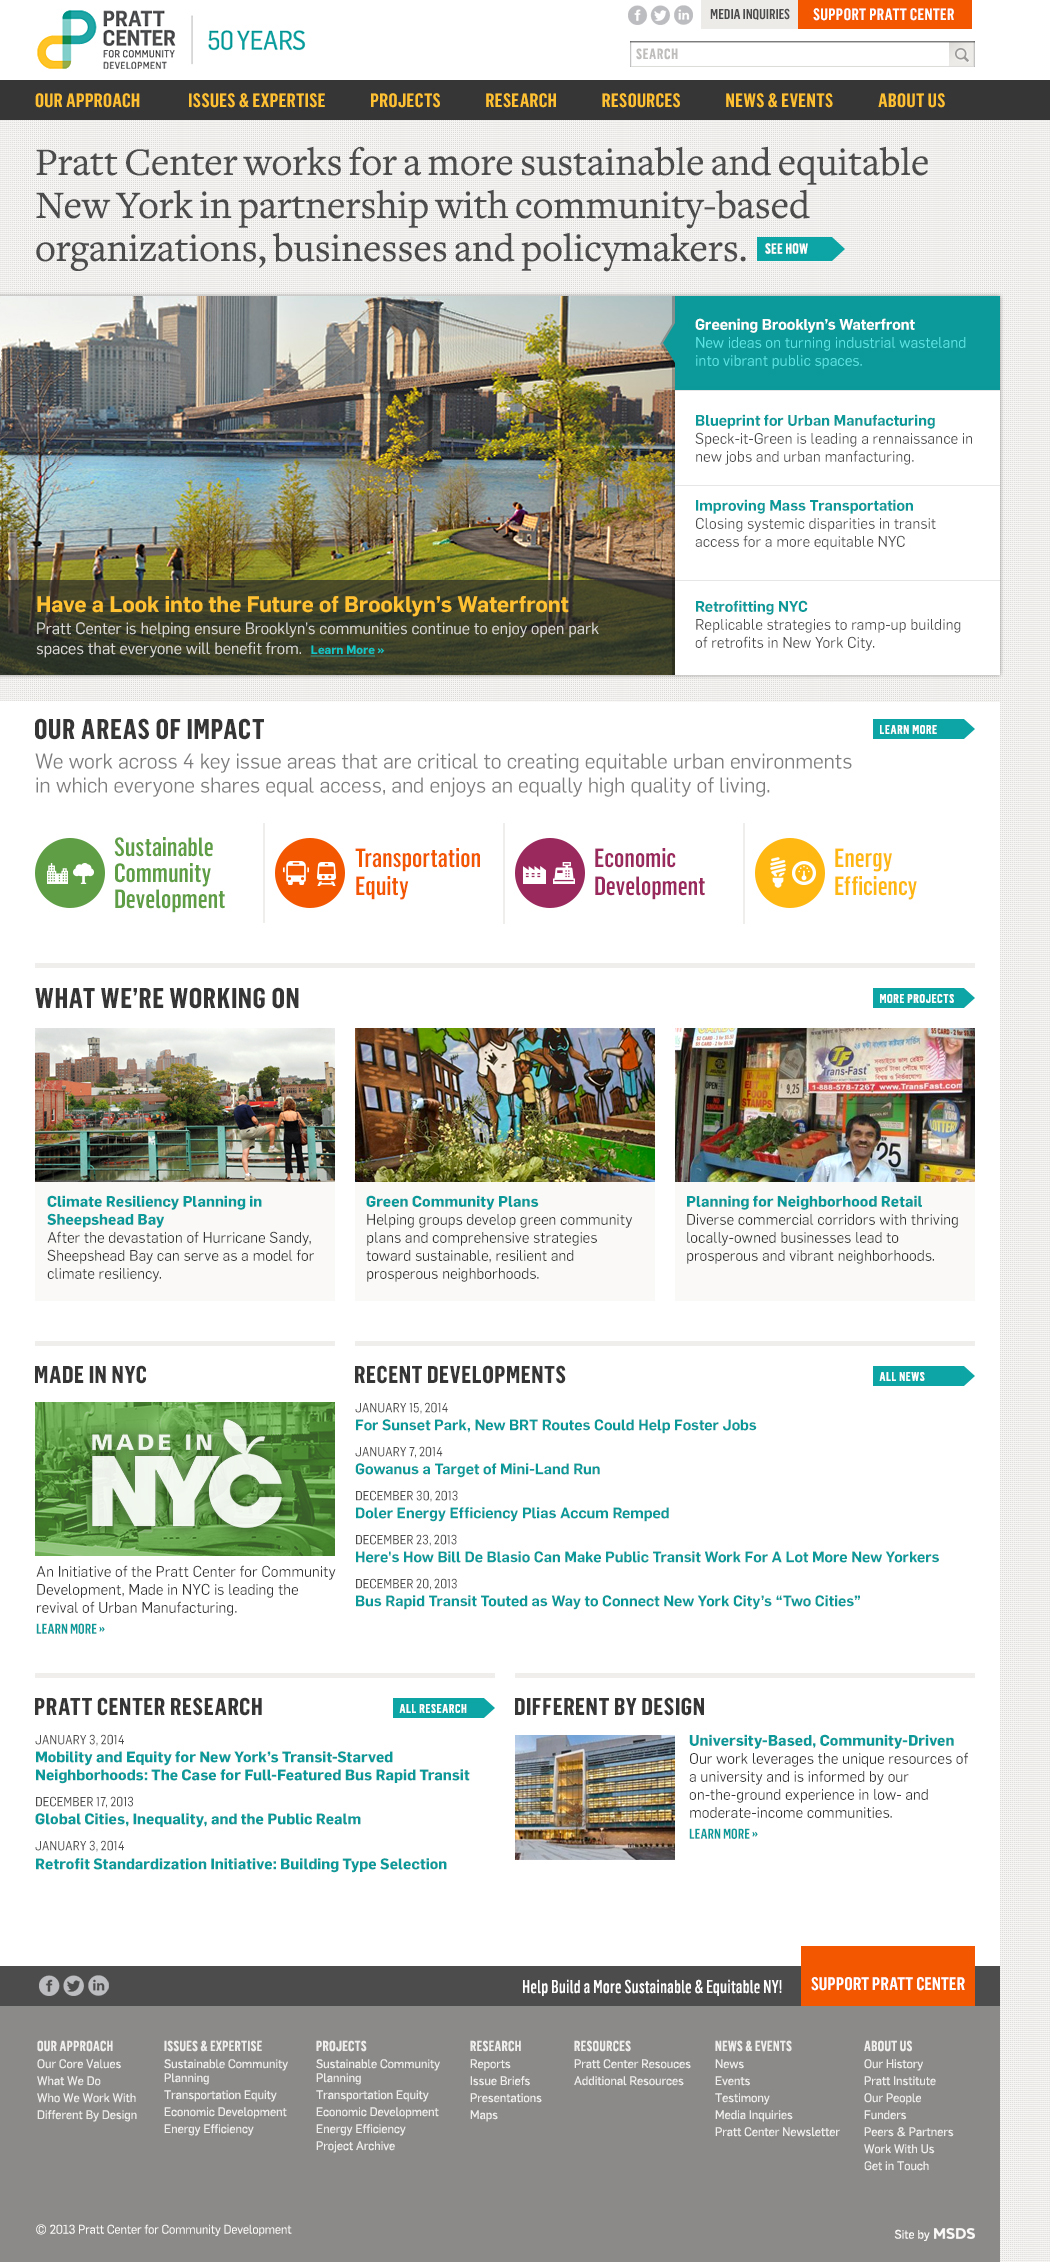 Website New York Policy Education environment community nonprofit non-profit